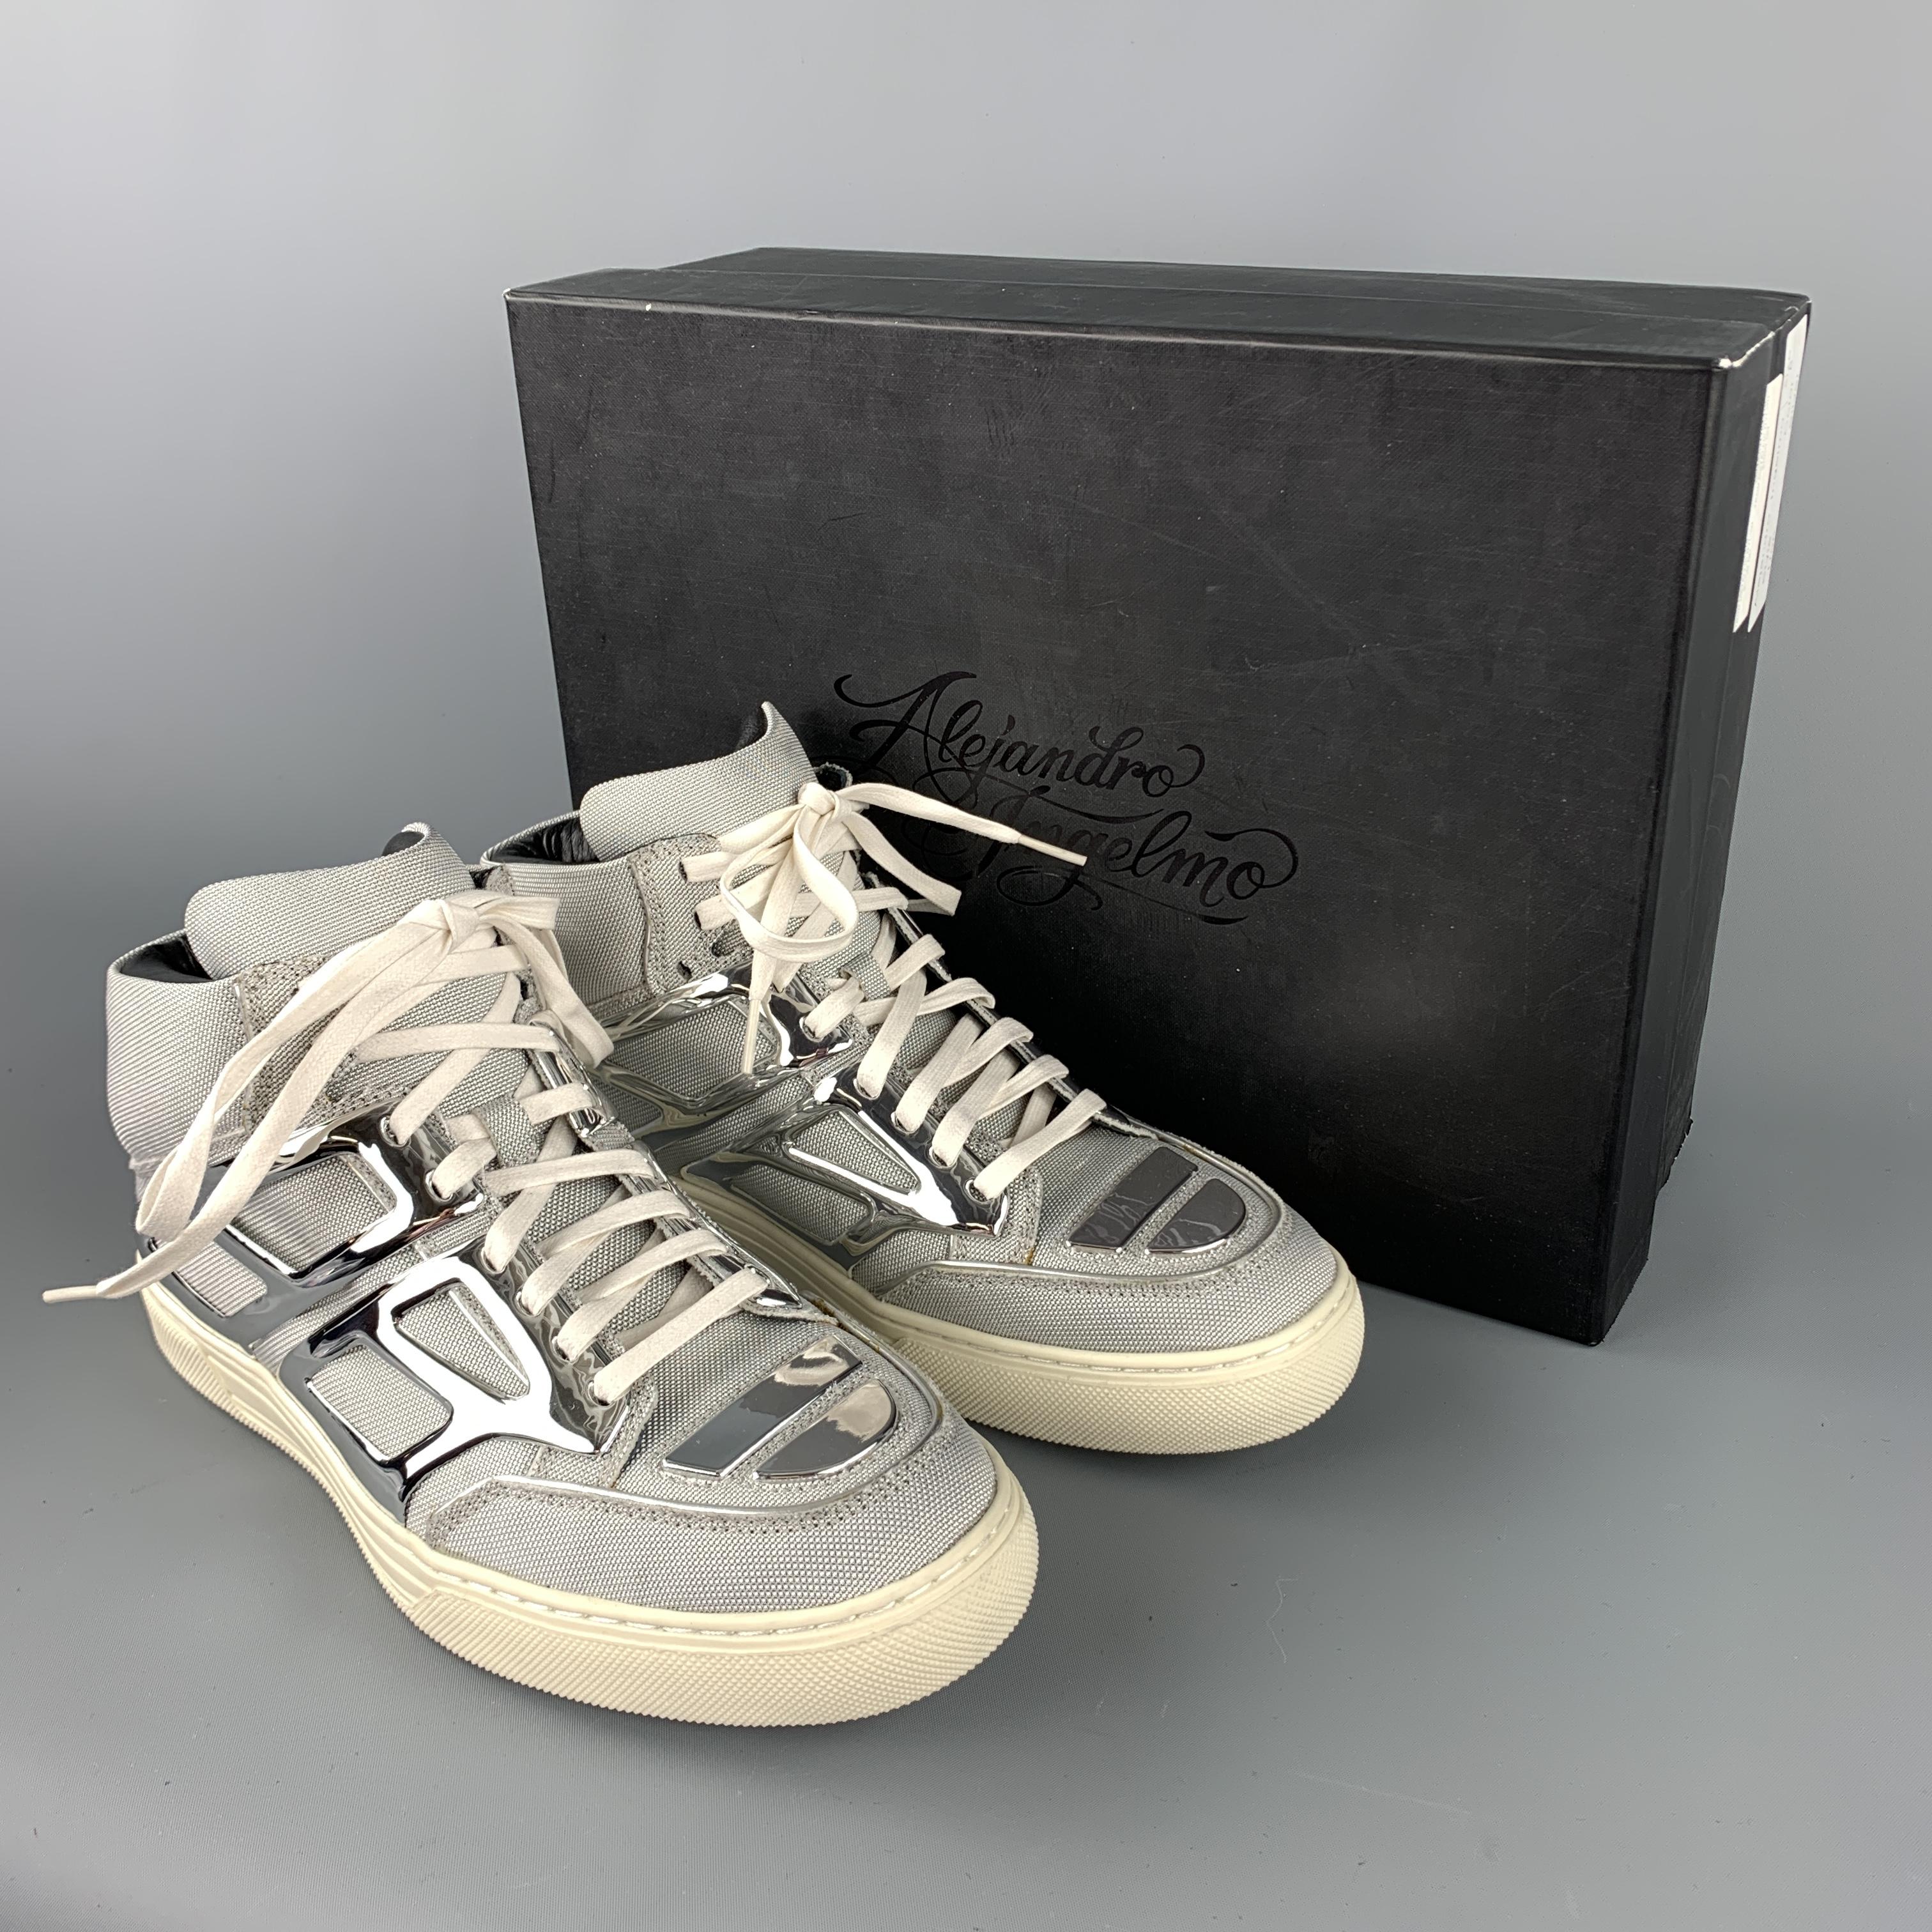 ALEJANDRO INGELMO TRON Size 8 Silver Metallic Canvas High Top Sneakers 2